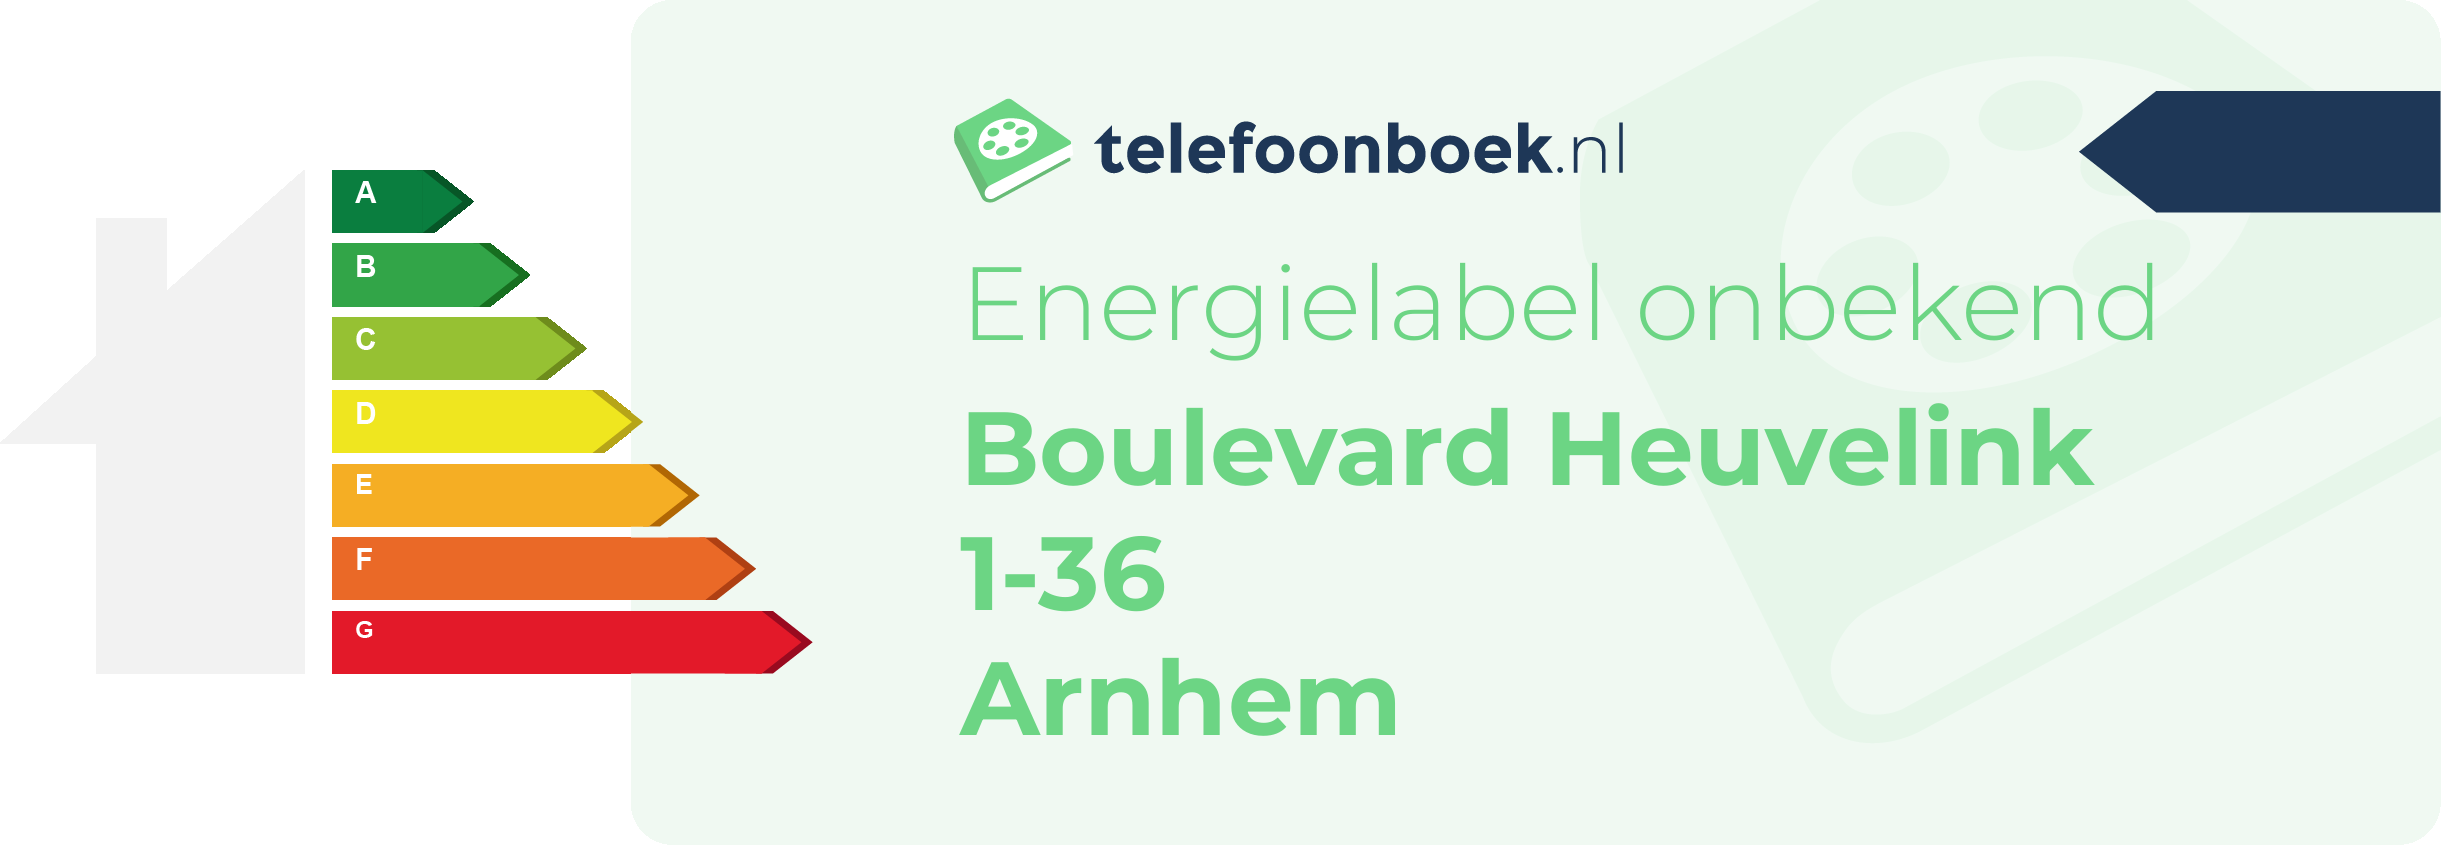 Energielabel Boulevard Heuvelink 1-36 Arnhem